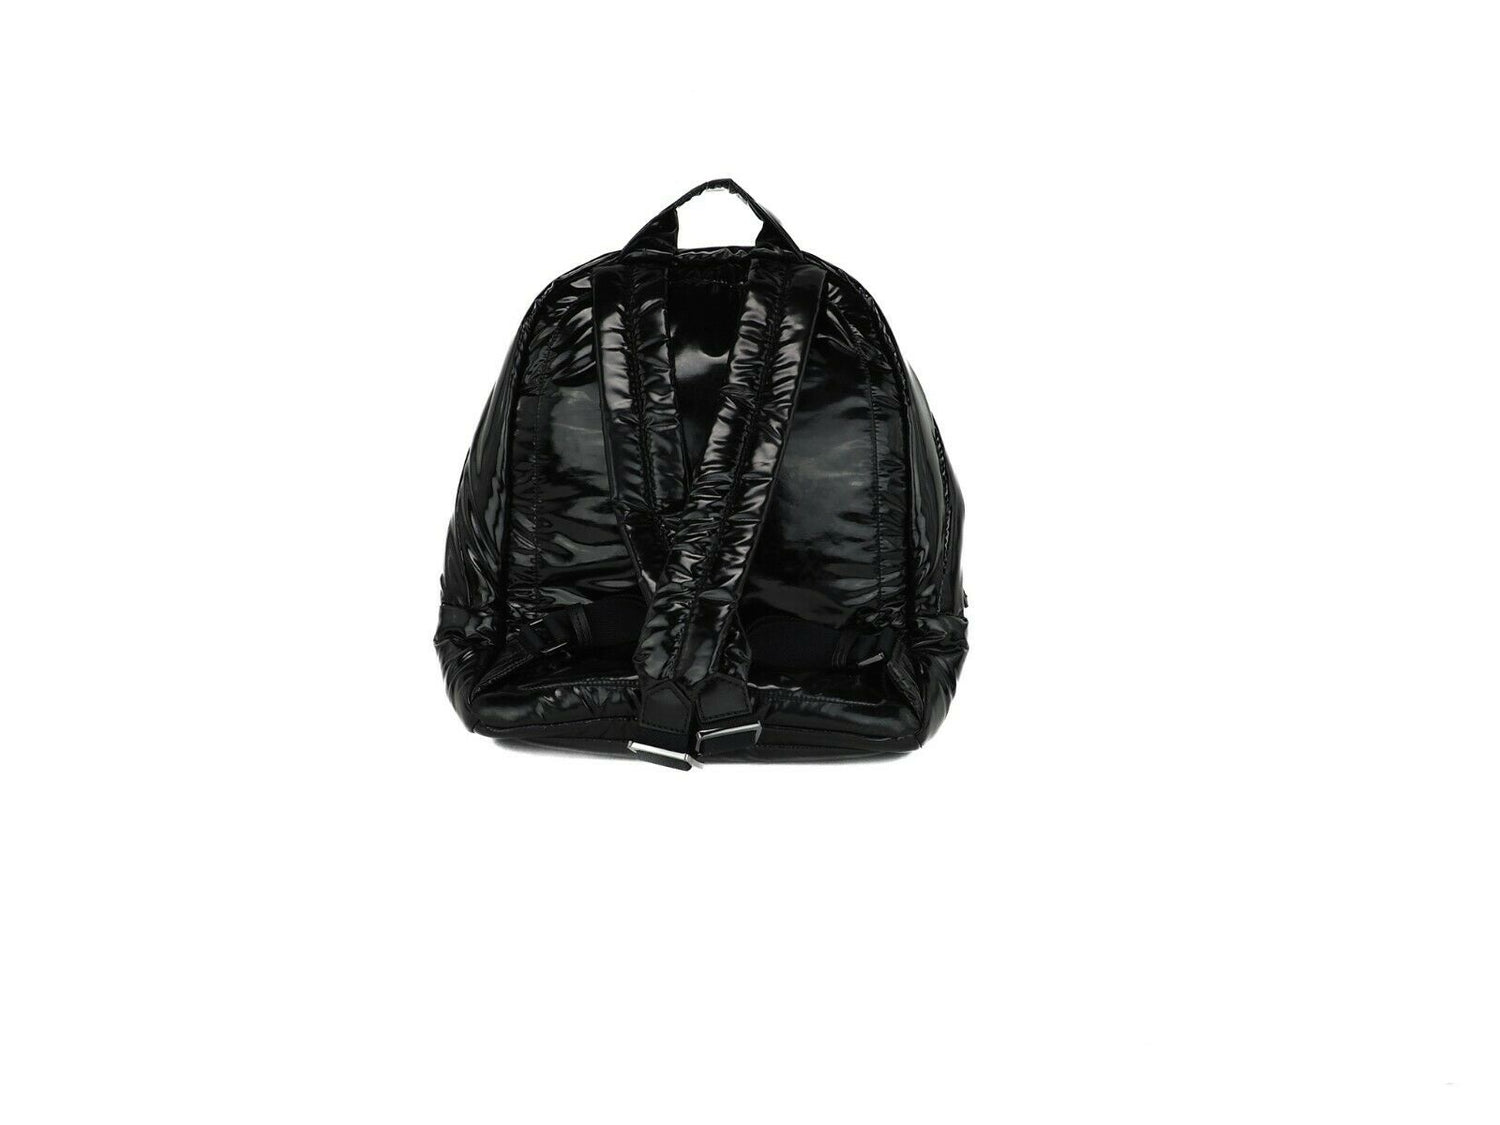 Rae Medium Quilted Patent Leather Backpack Bookbag (Black)